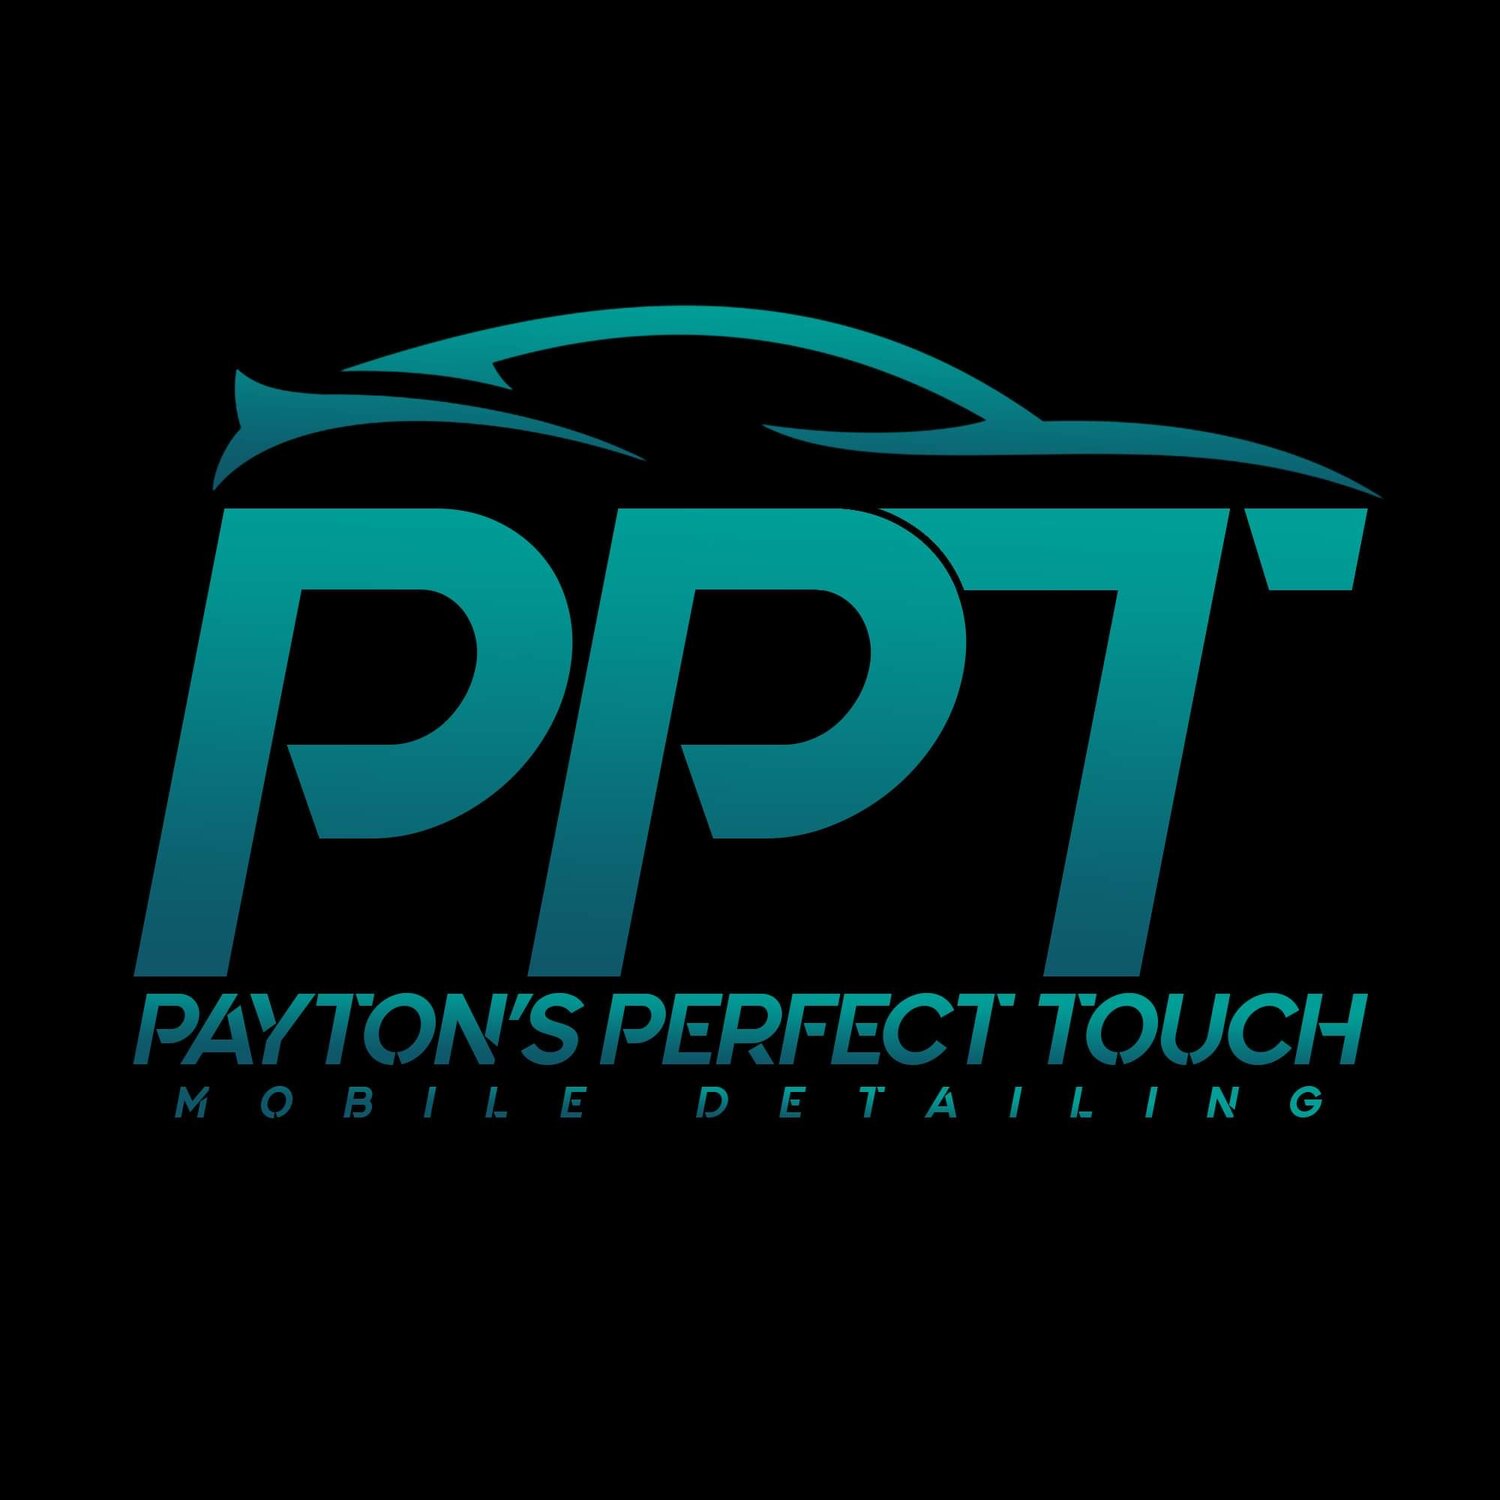 PPT Mobile Detailing